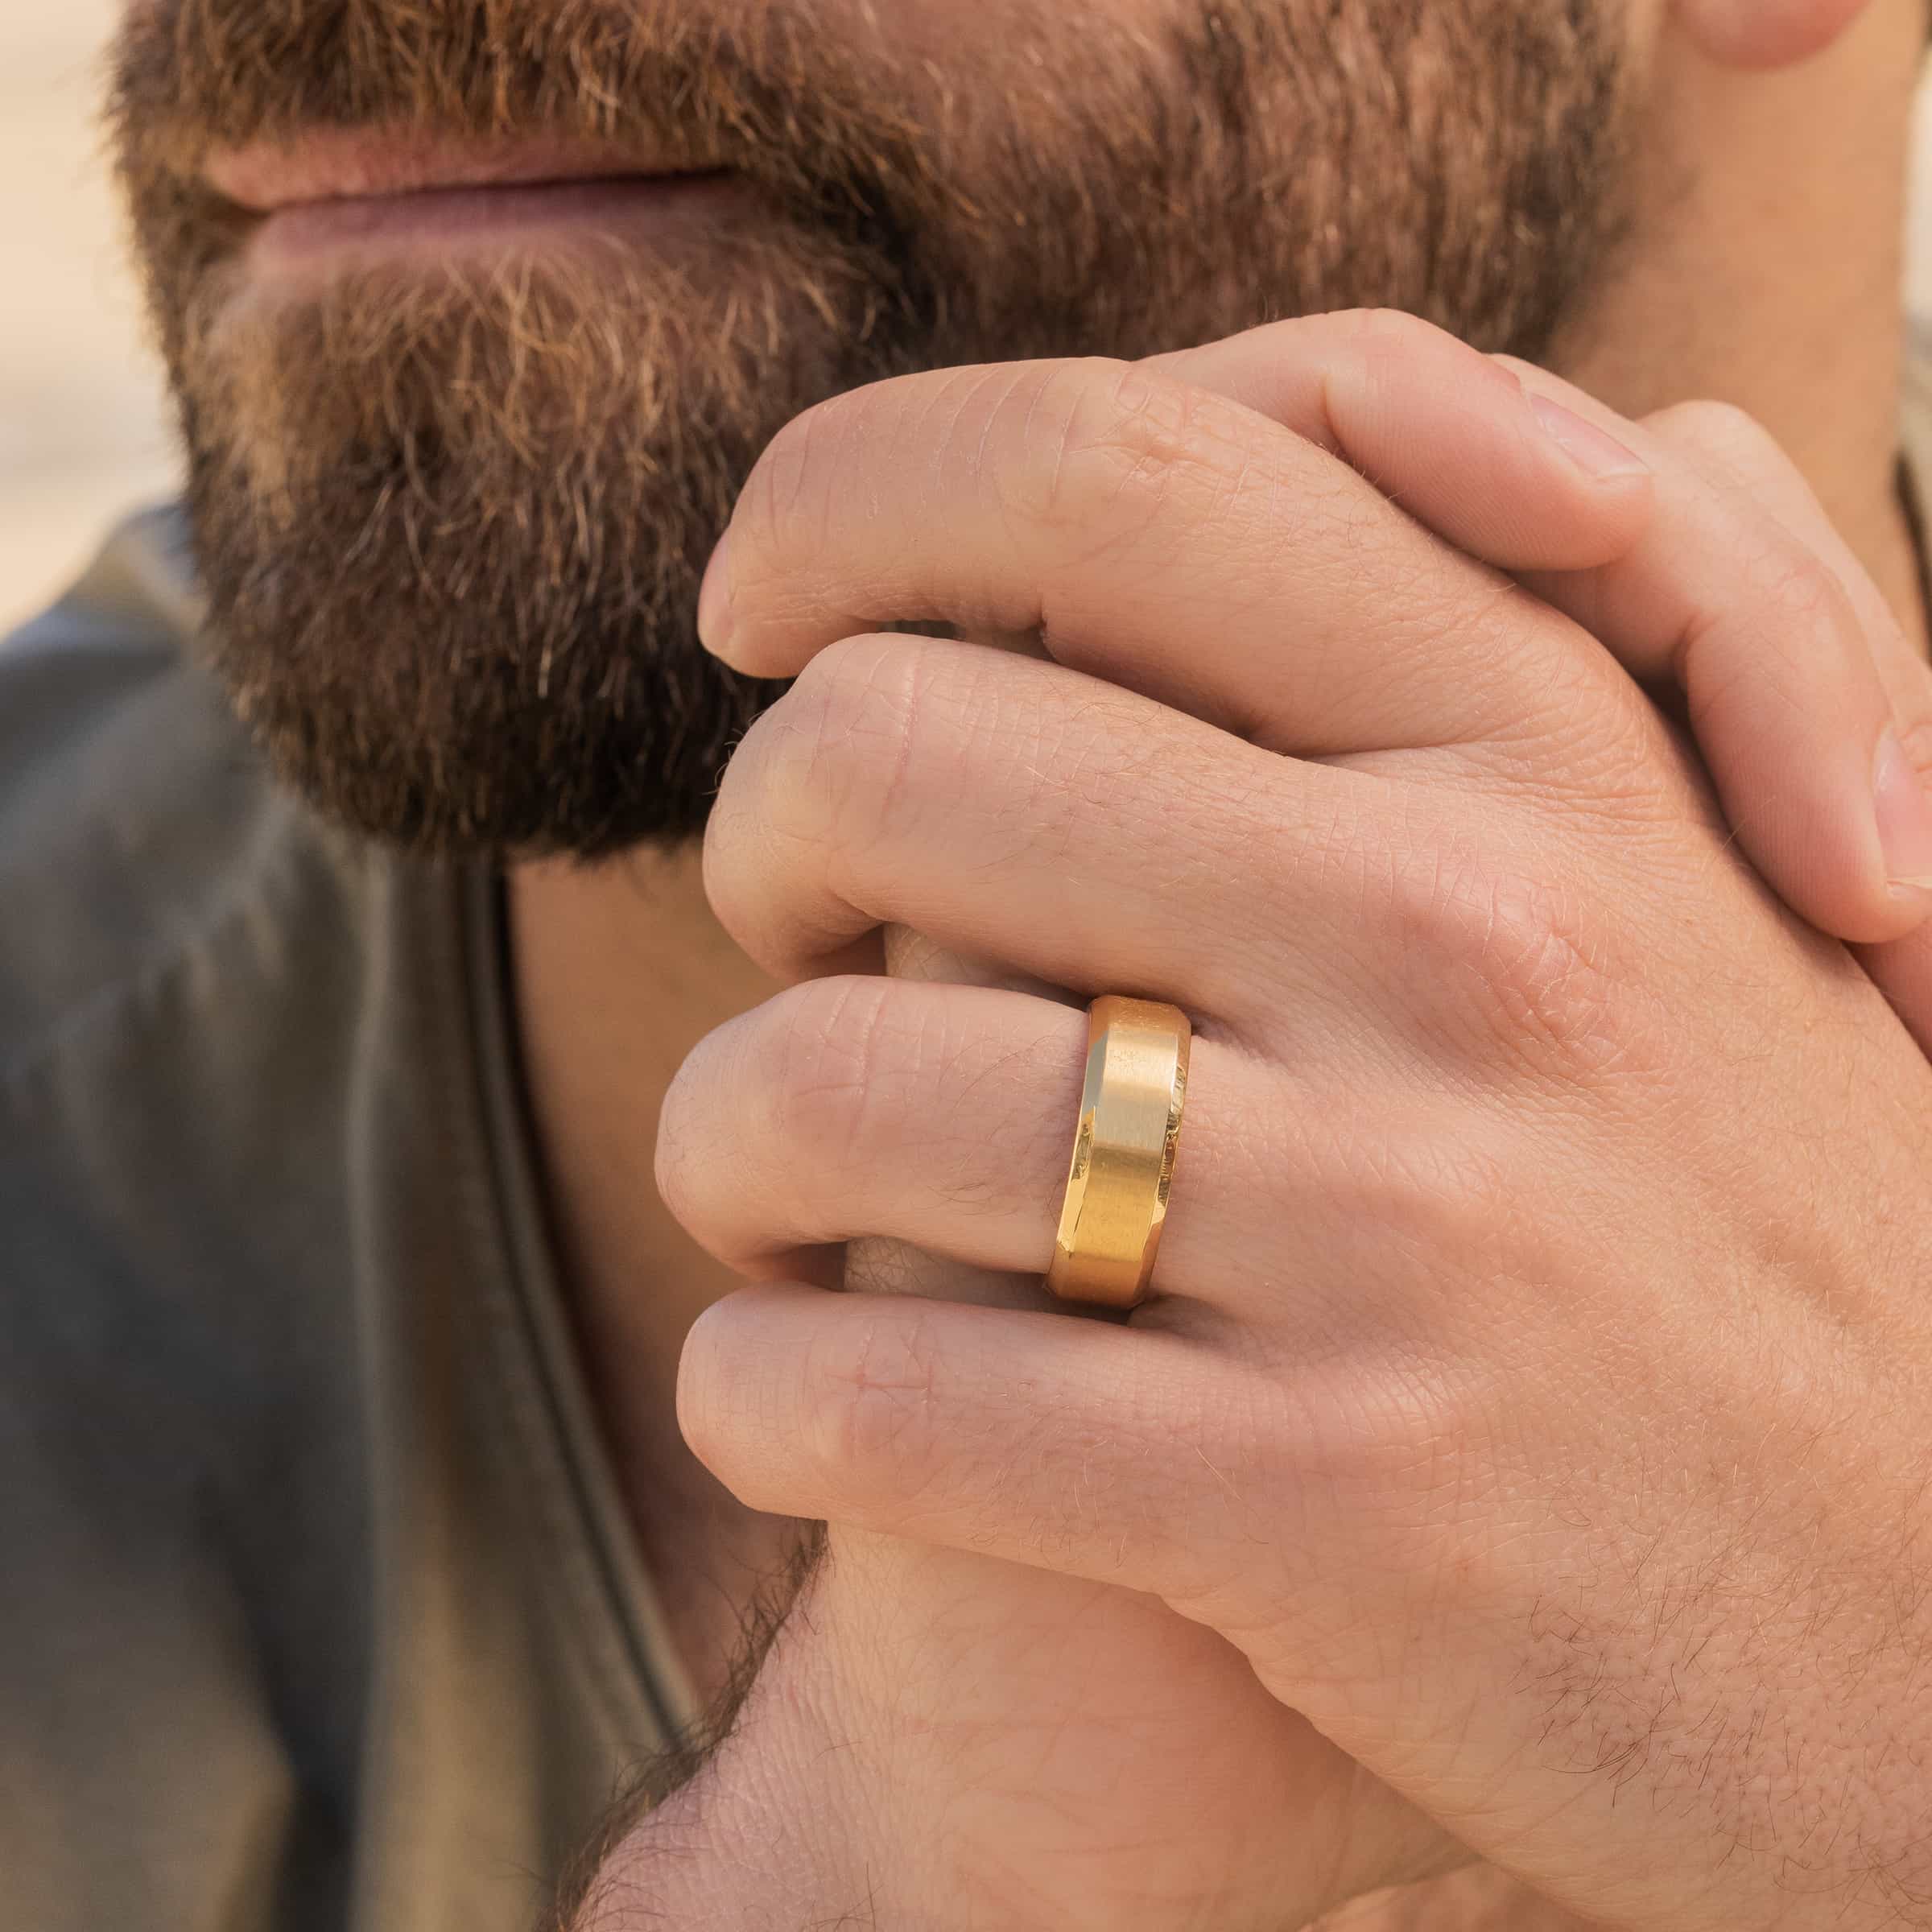 Buy Traditional Gold Design Tv Mothiram Daily Wear Impon Ring Design for Men